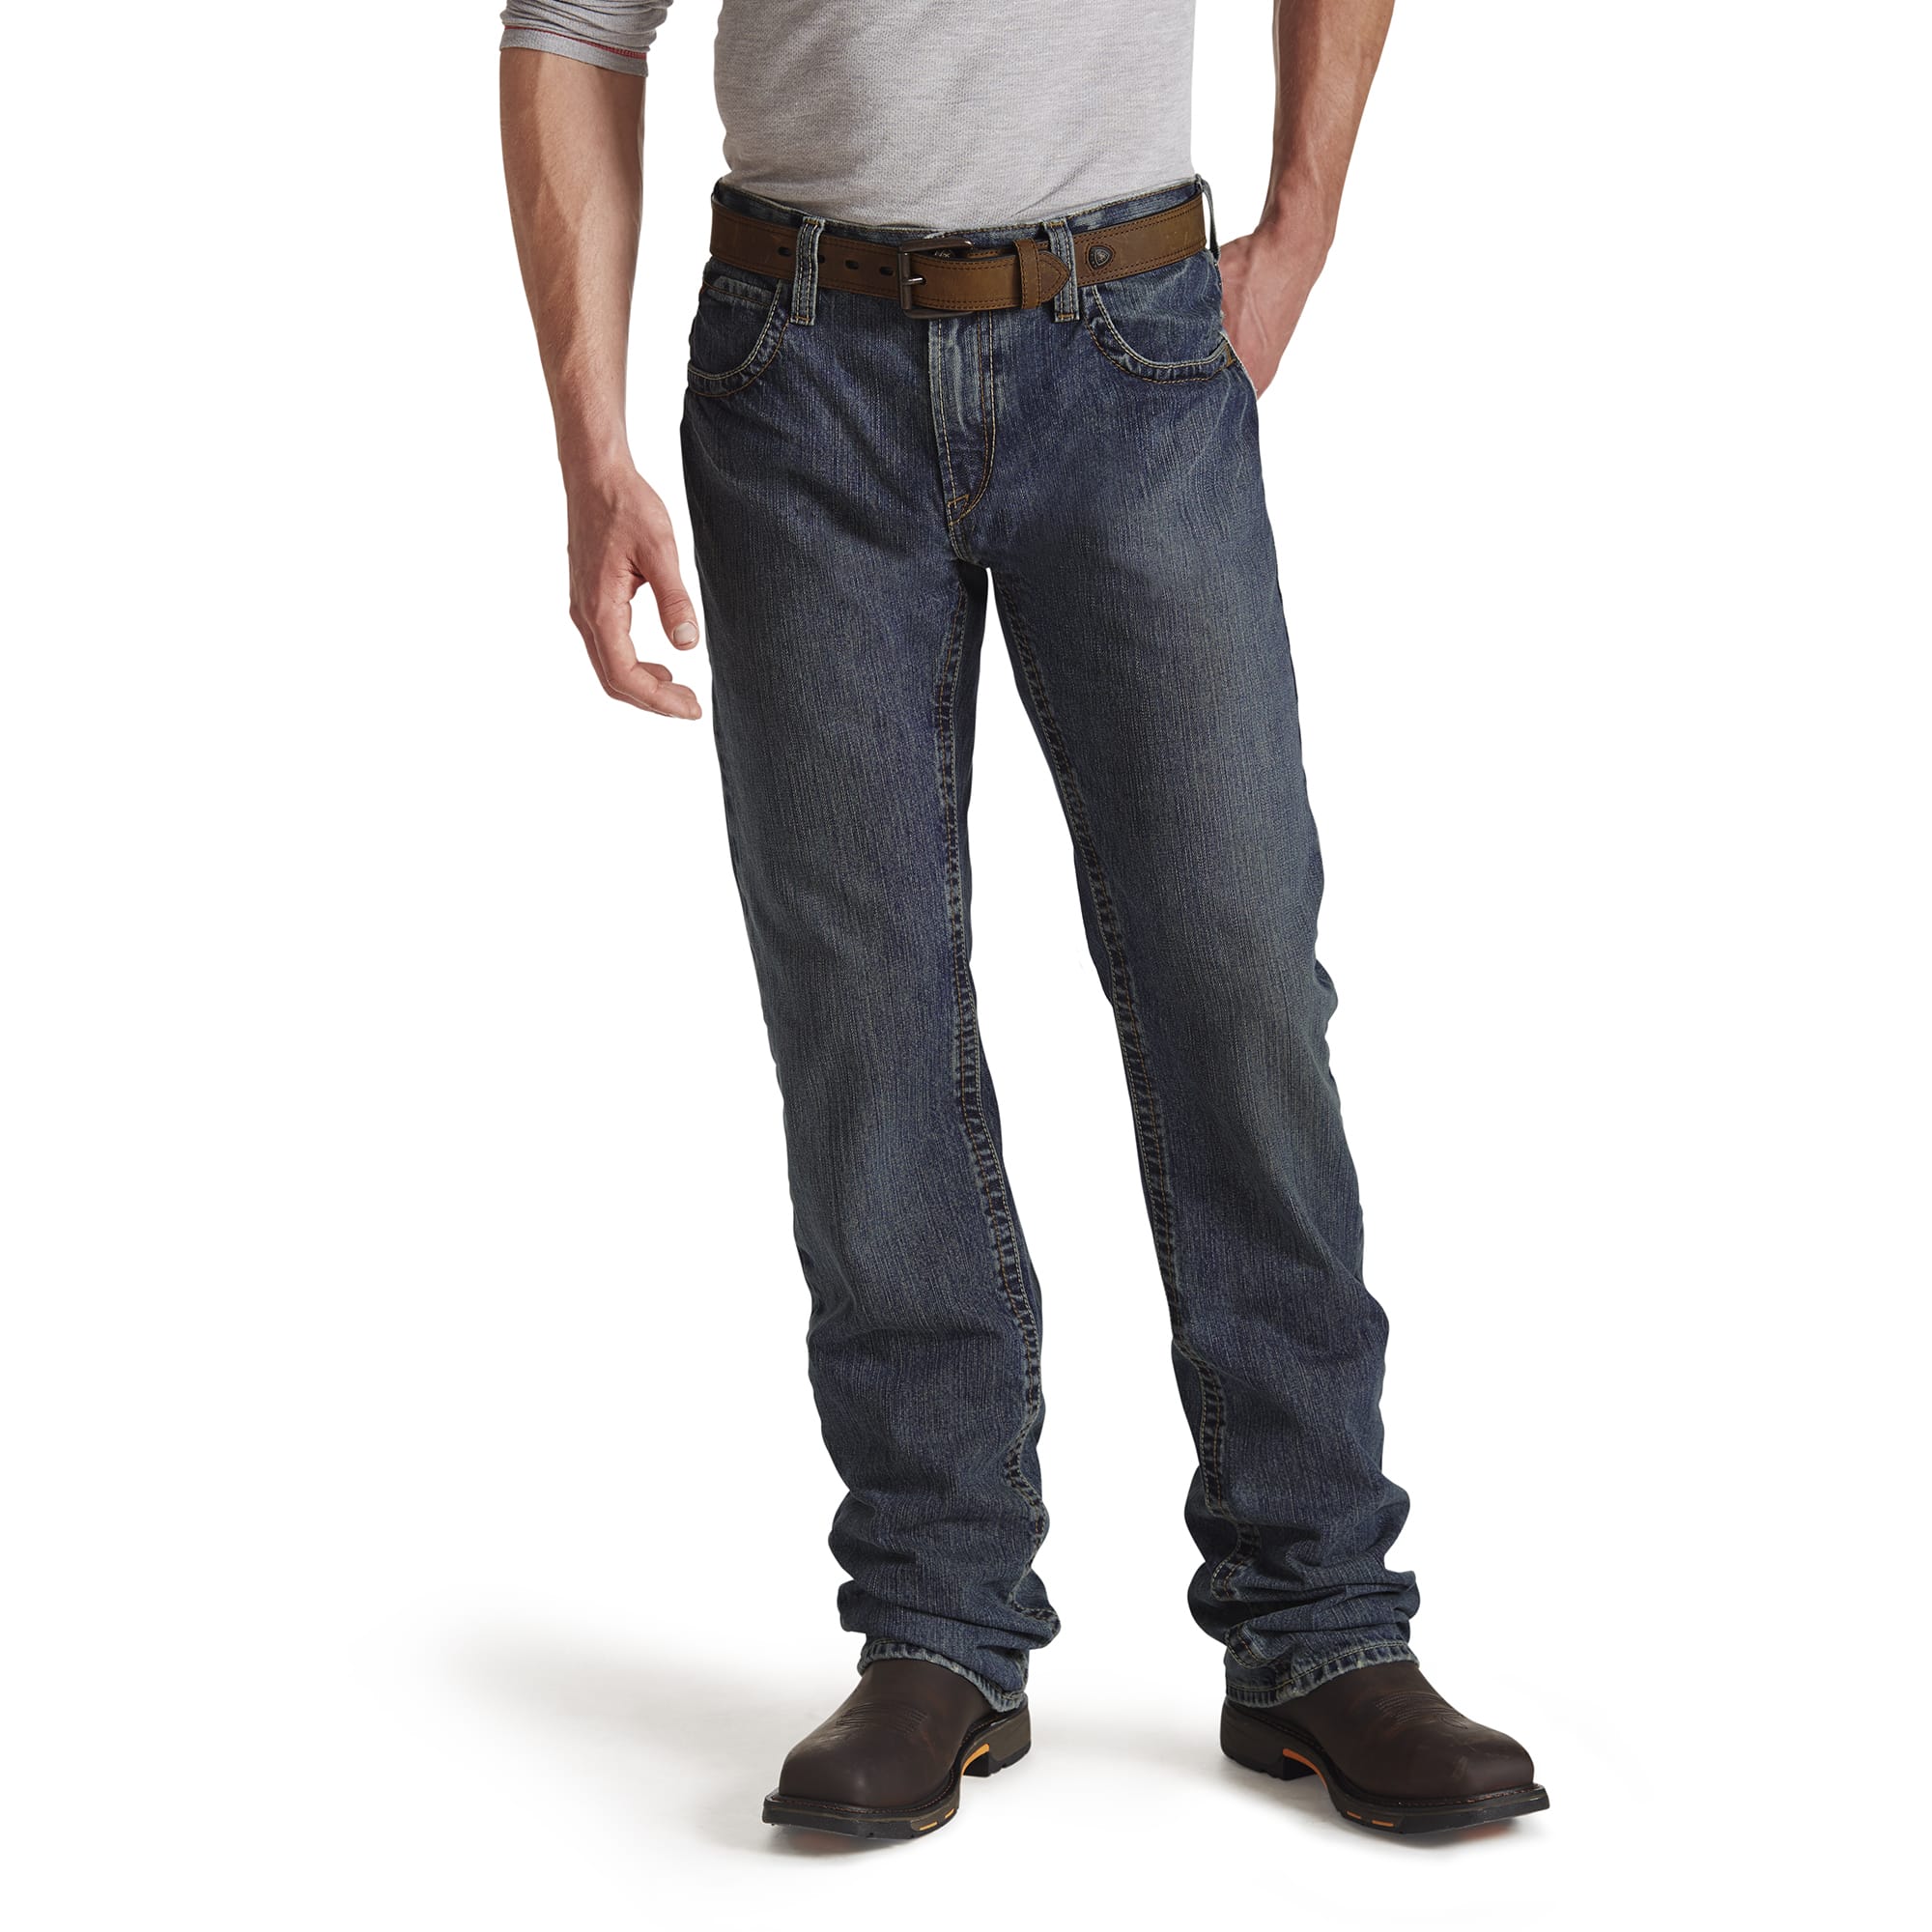 flame resistant slim fit jeans